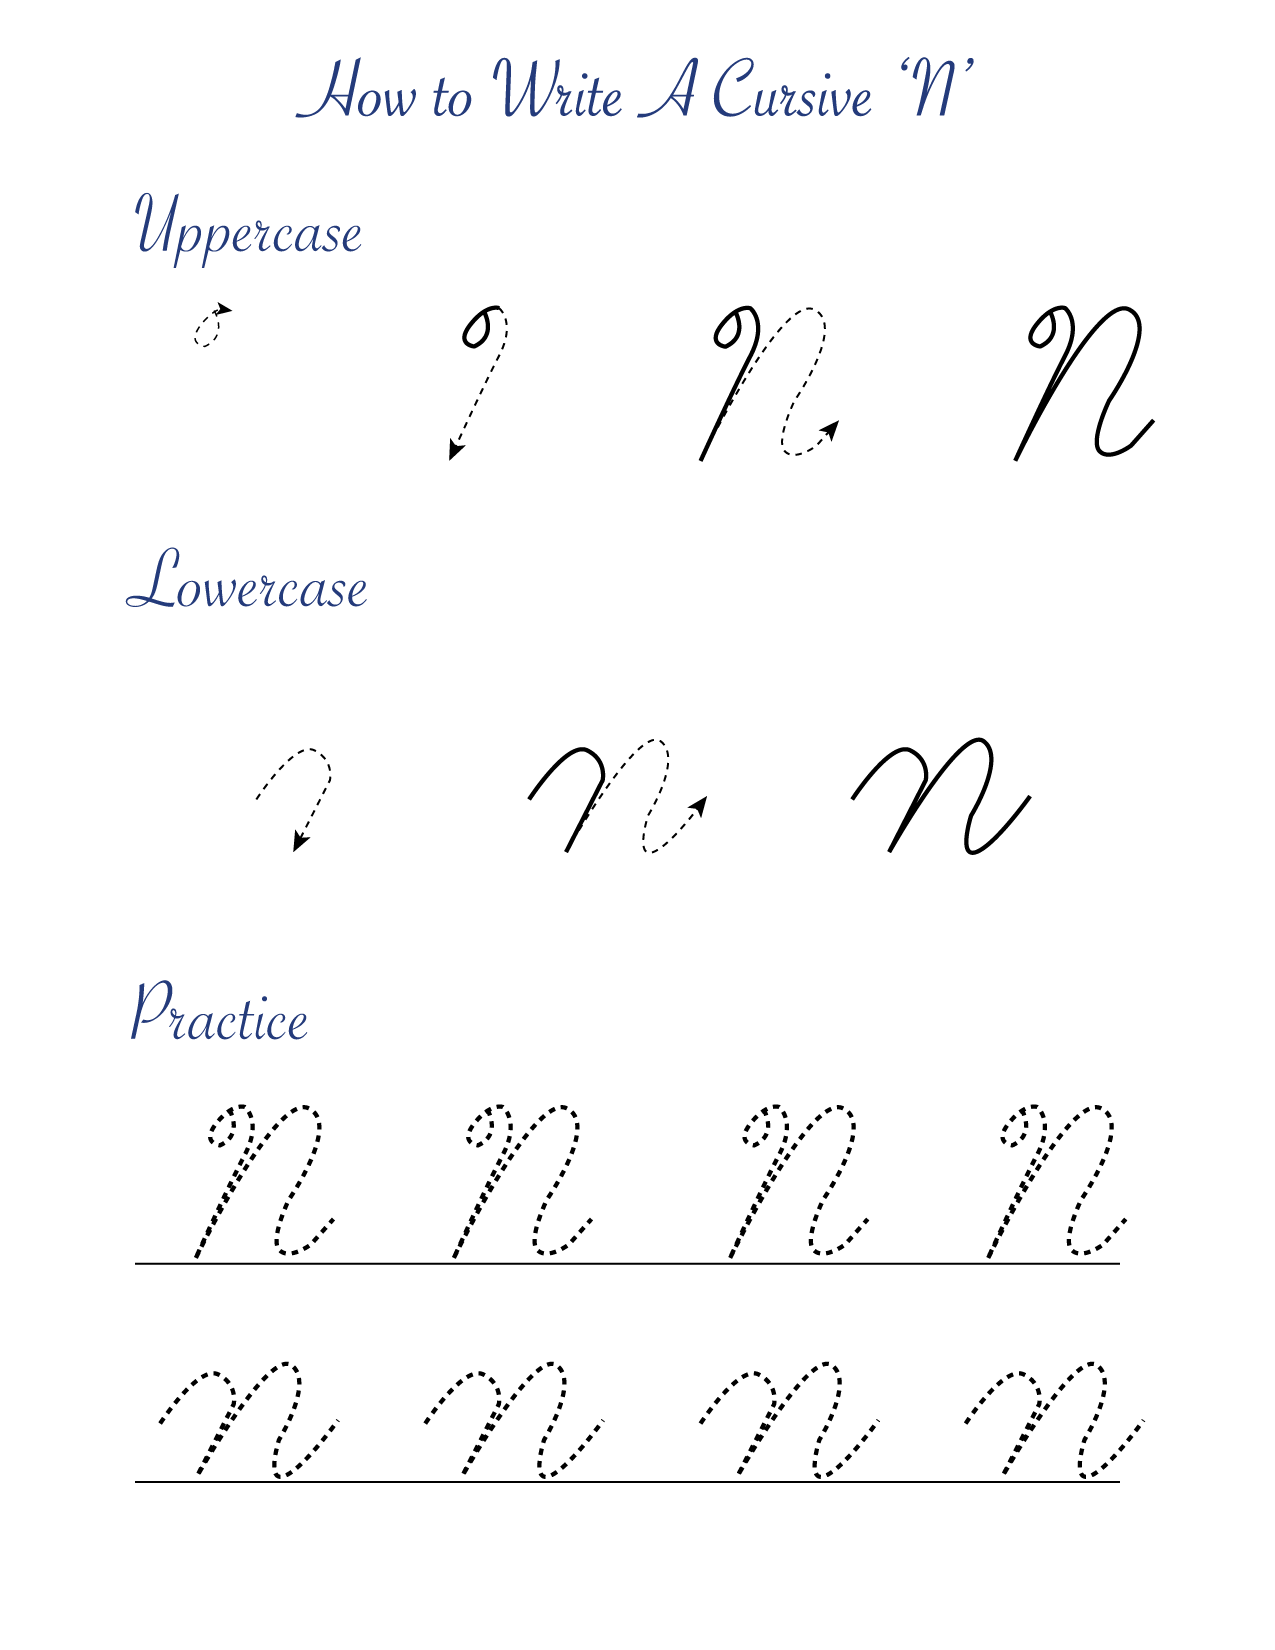 How to write a cursive 'N'